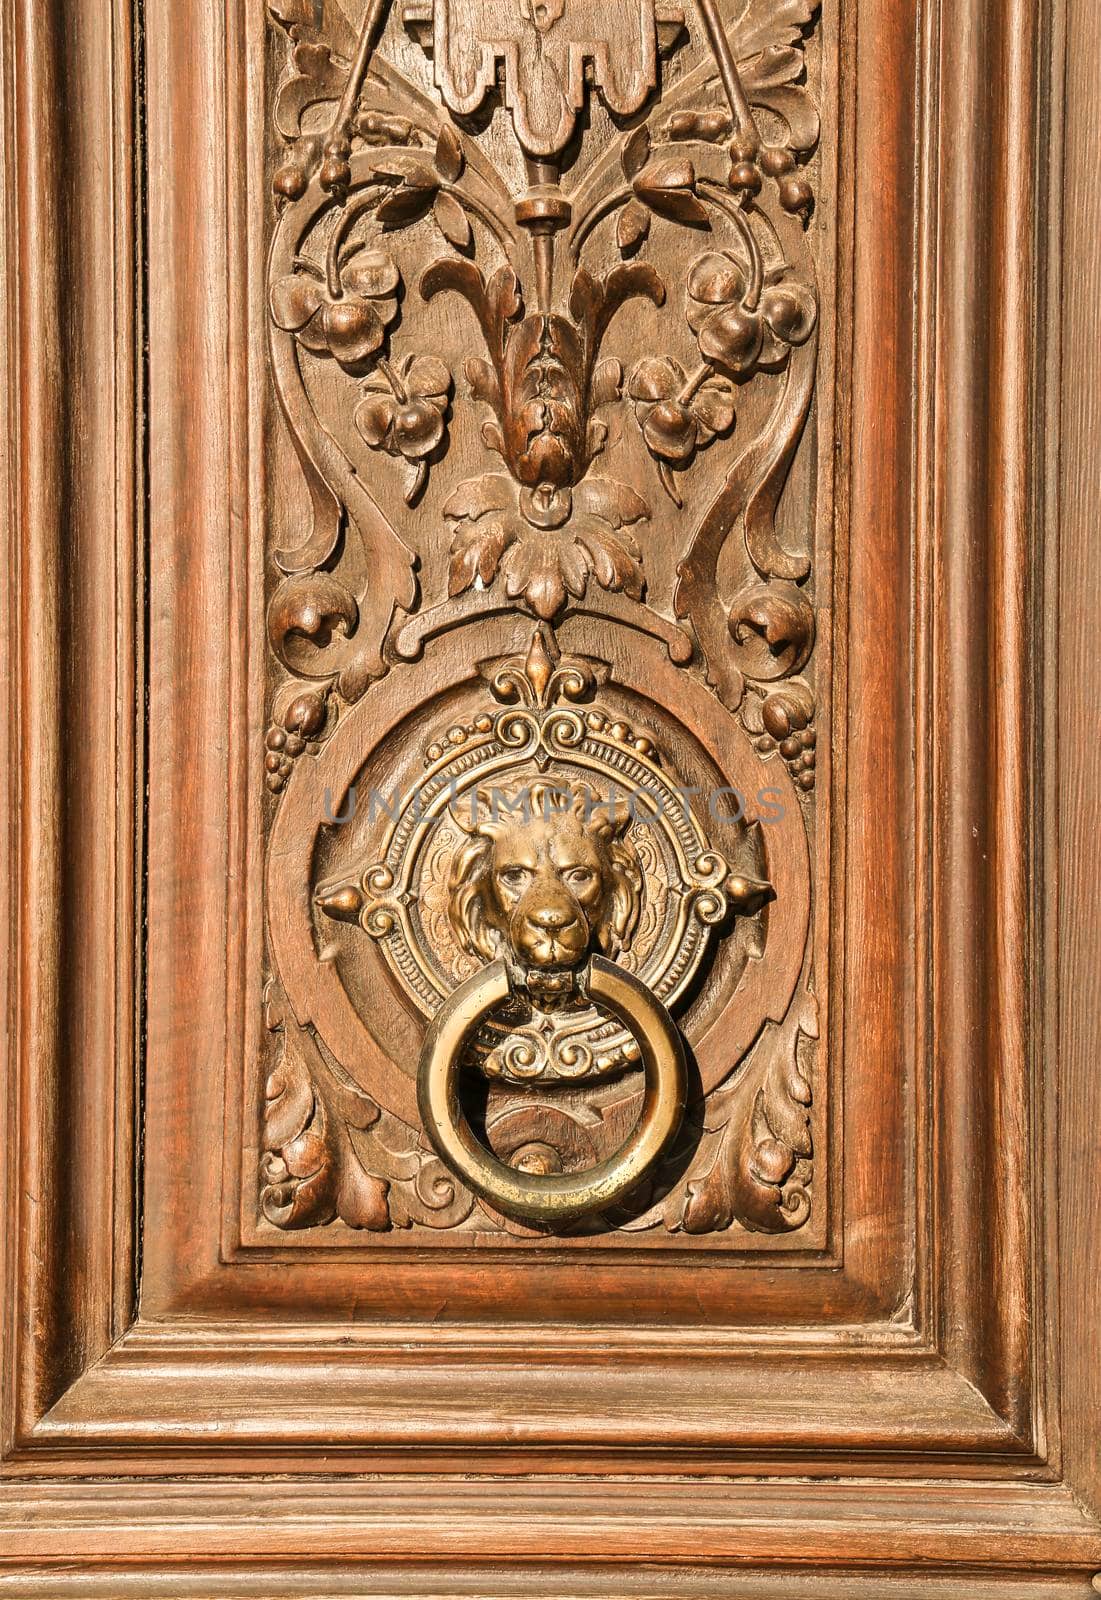 Carved wooden door and vintage golden knocker by soniabonet